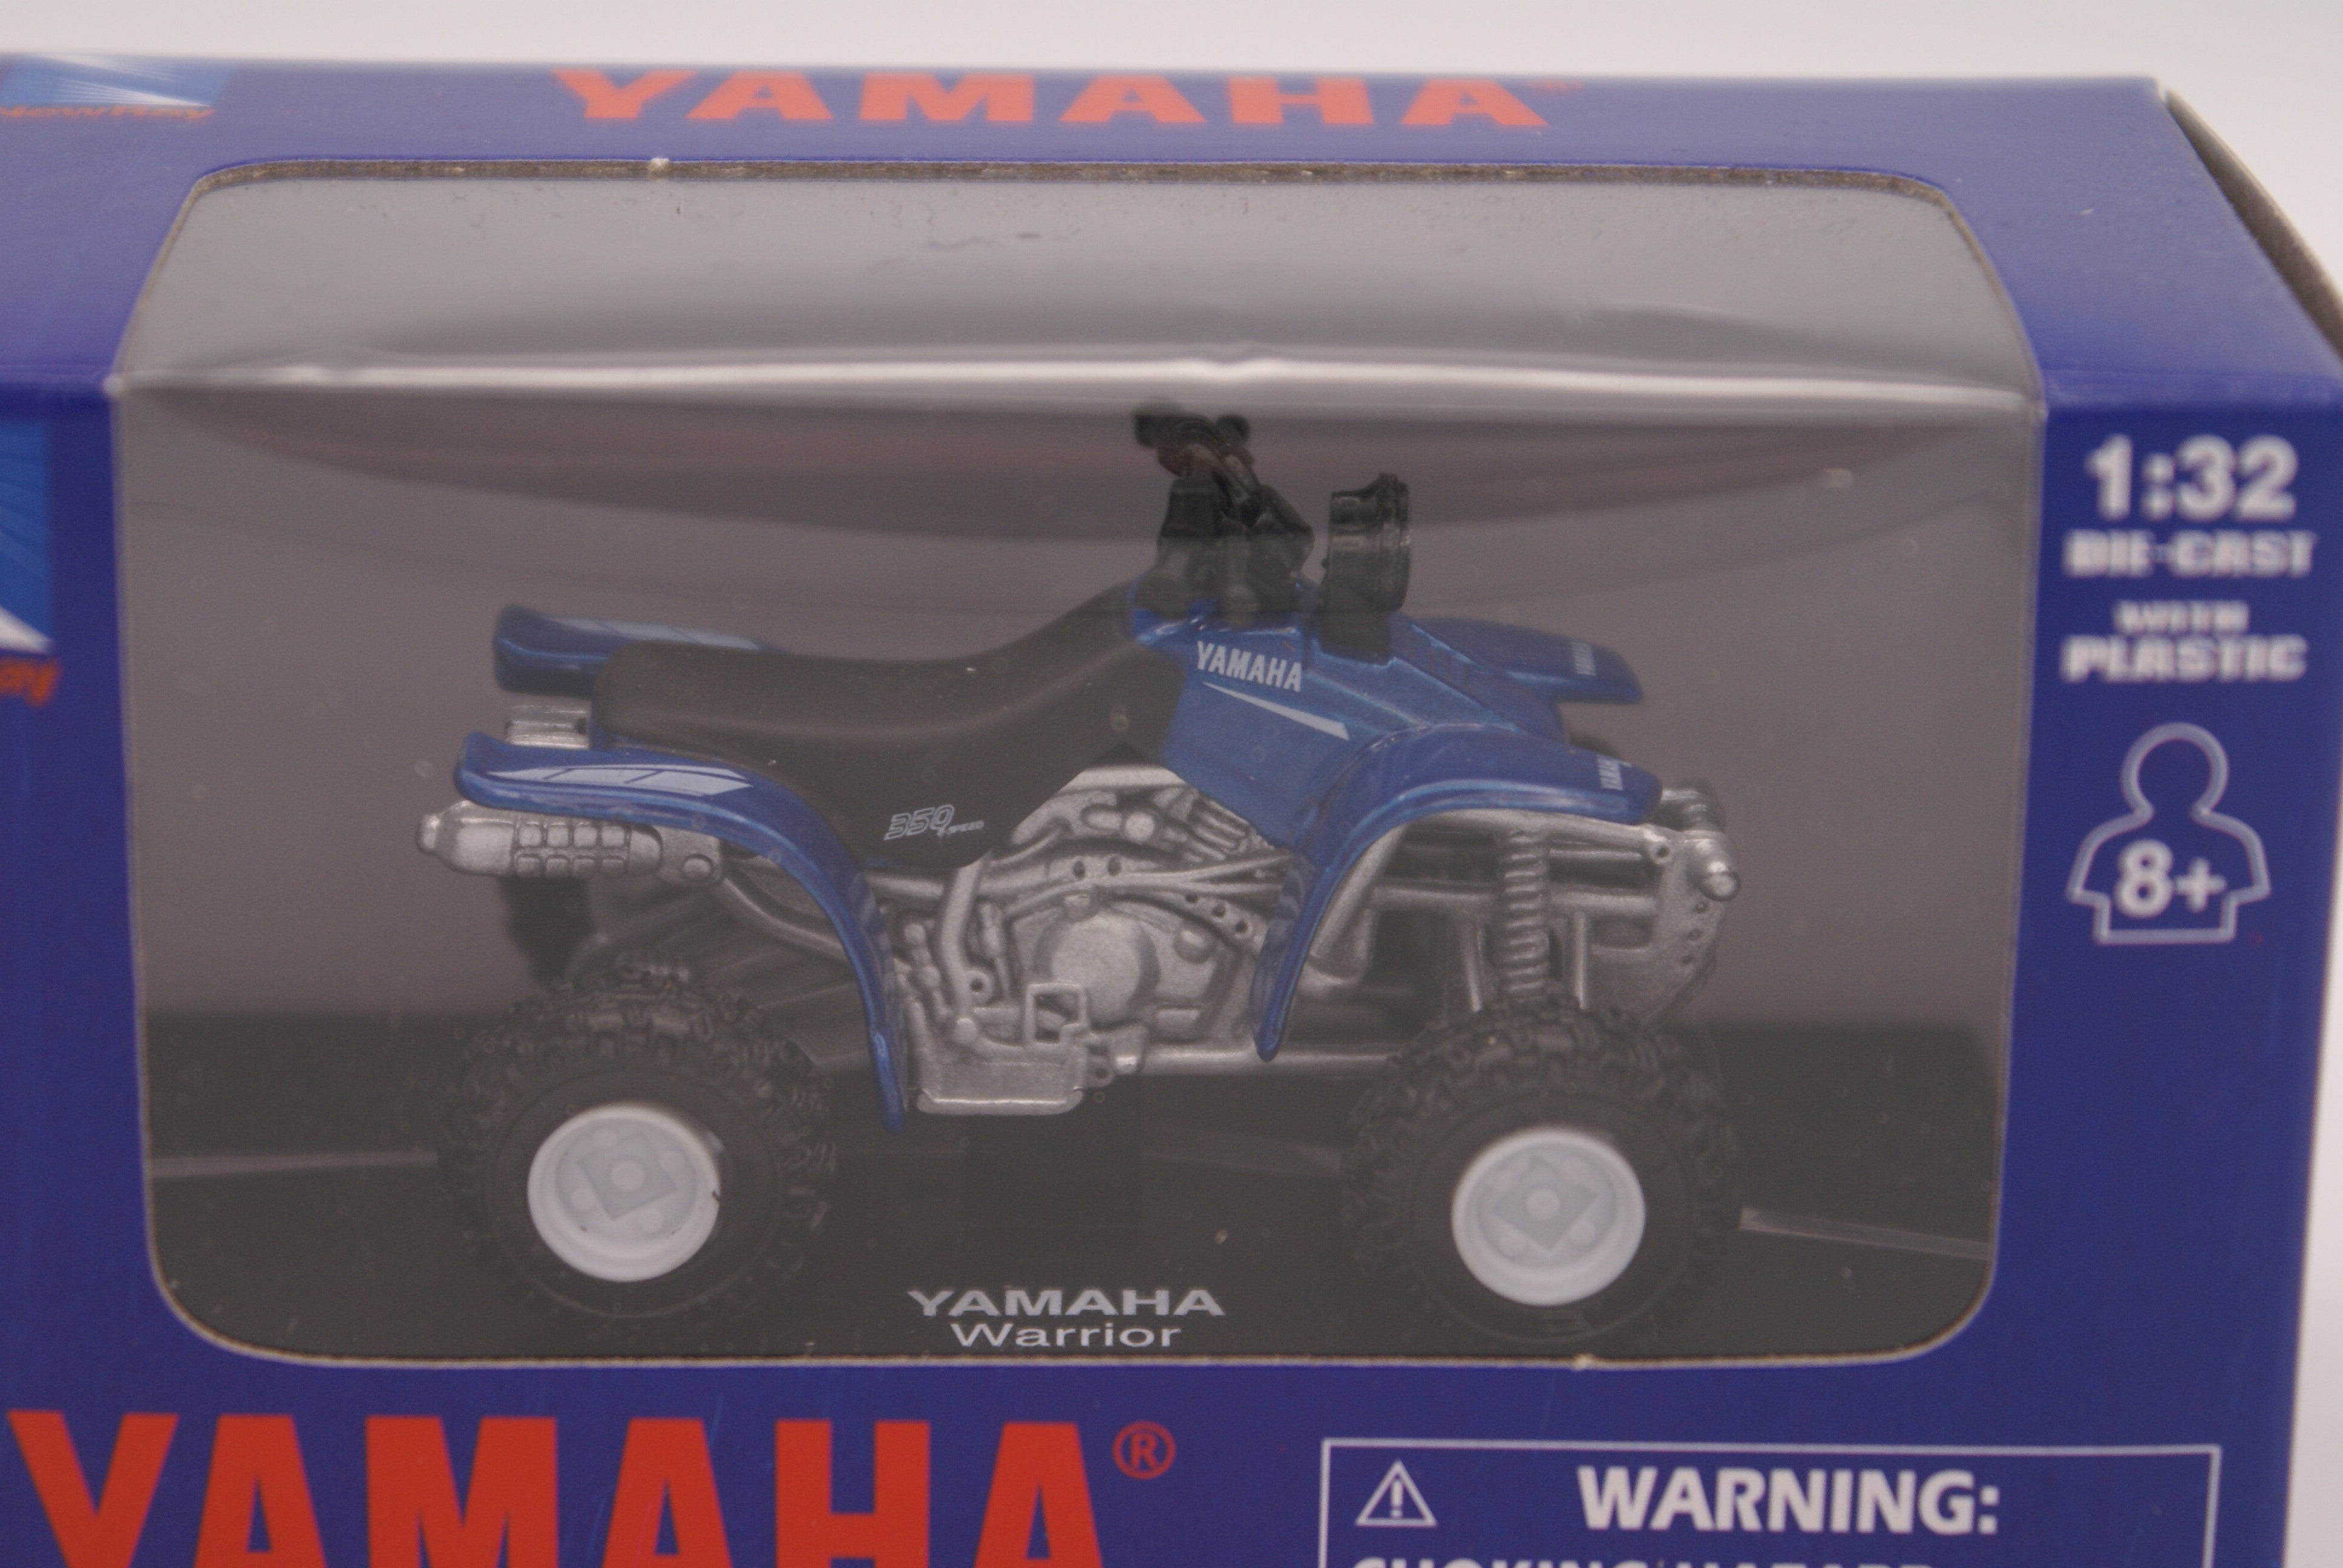 Yamaha Warrior Quad